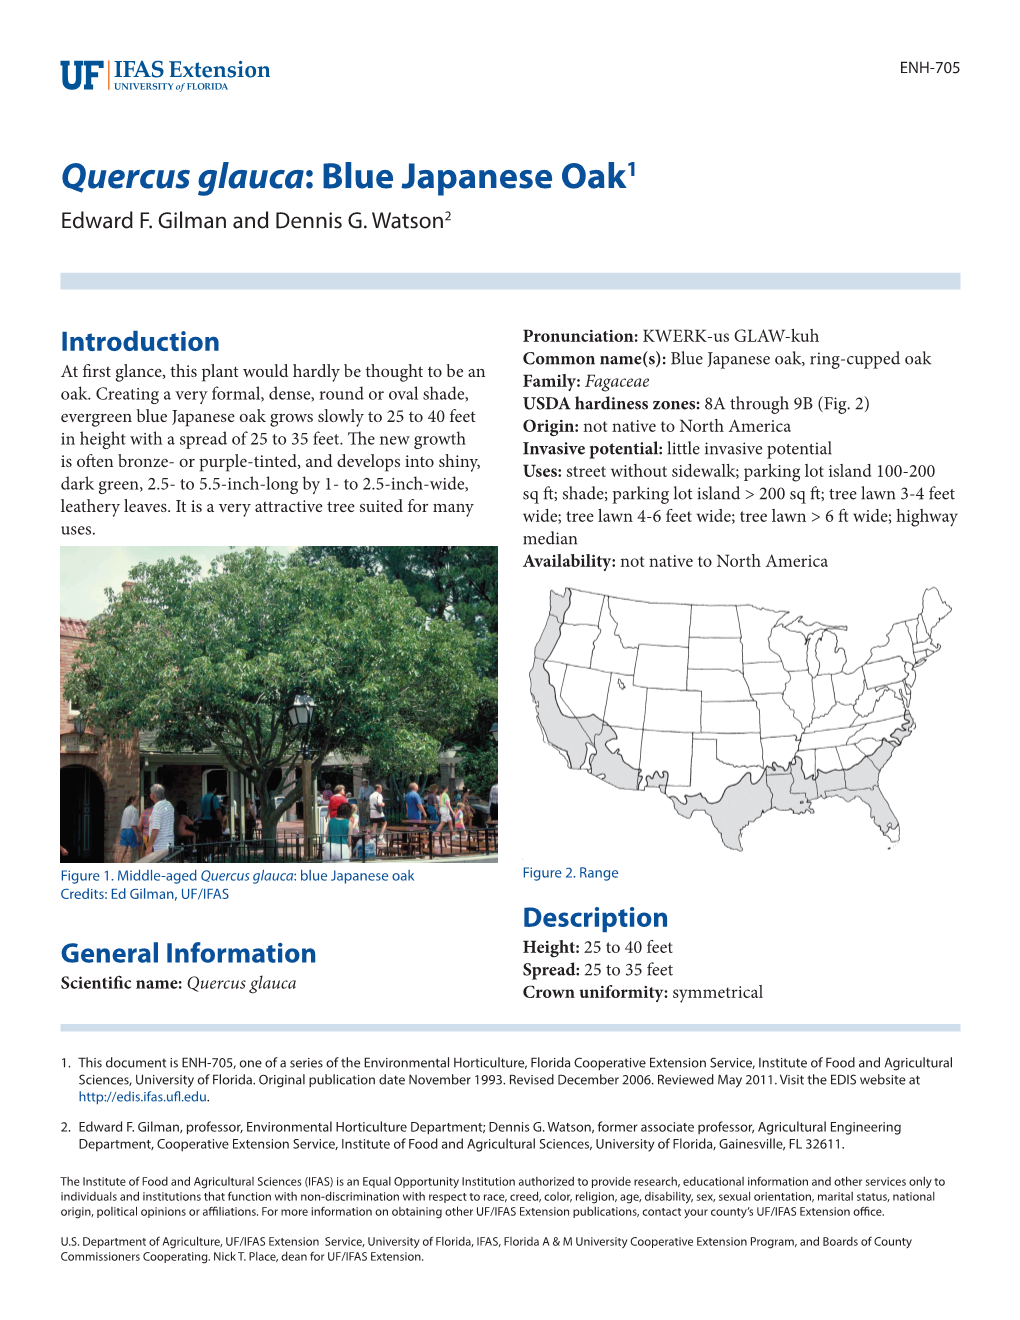 Quercus Glauca: Blue Japanese Oak1 Edward F